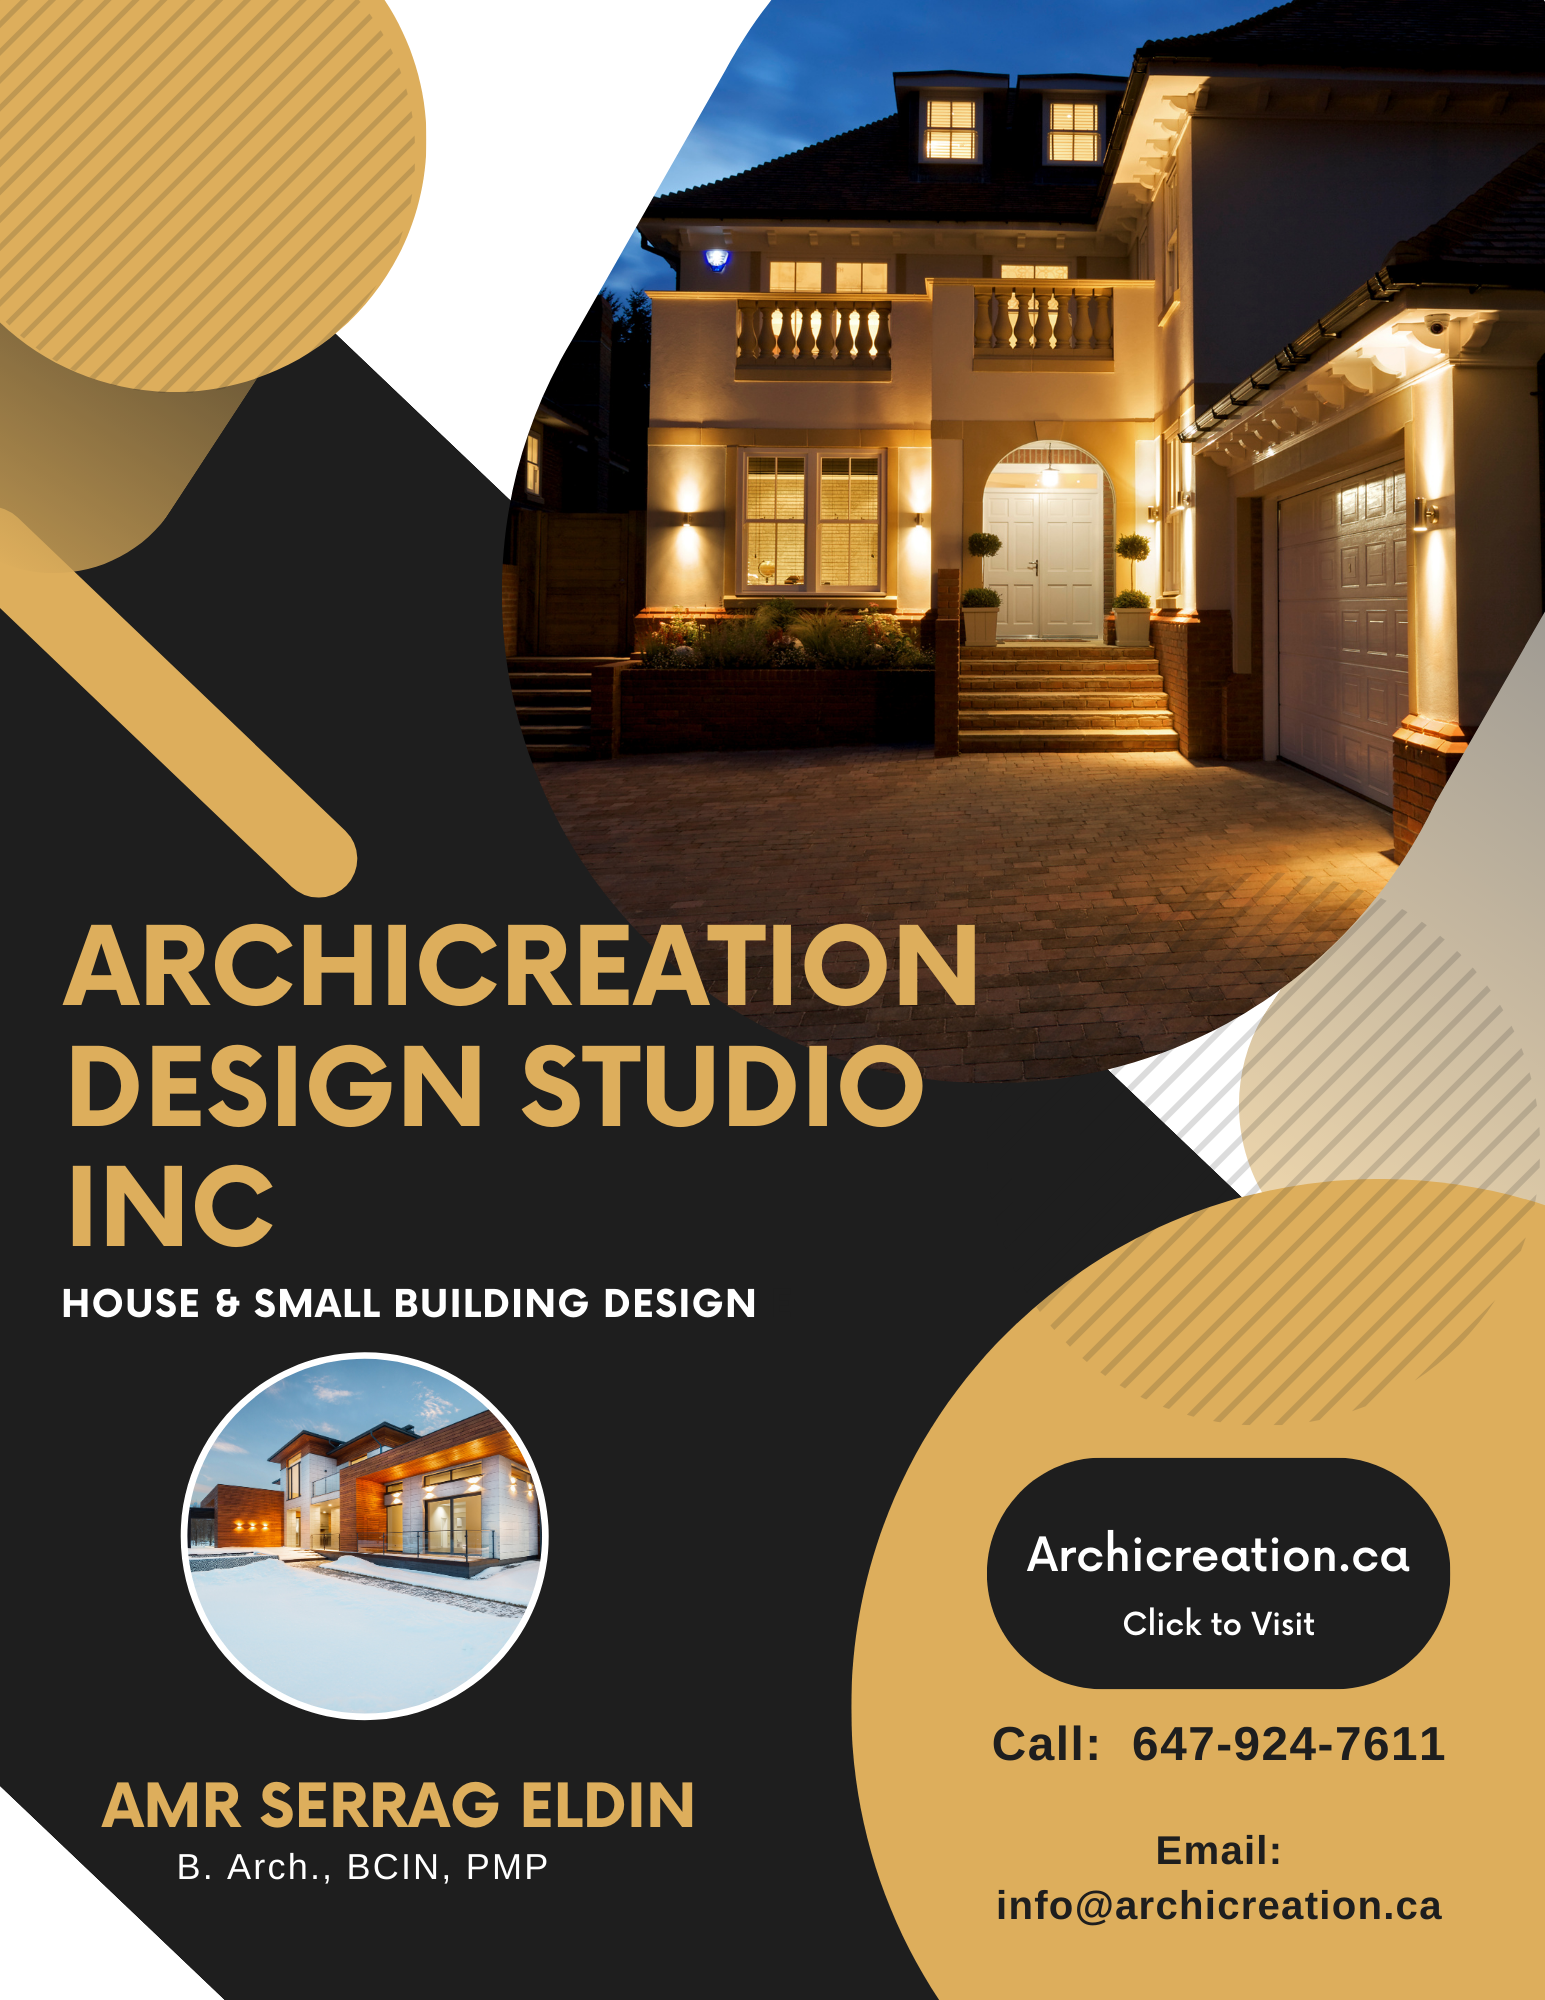 Archicreation Design Studio